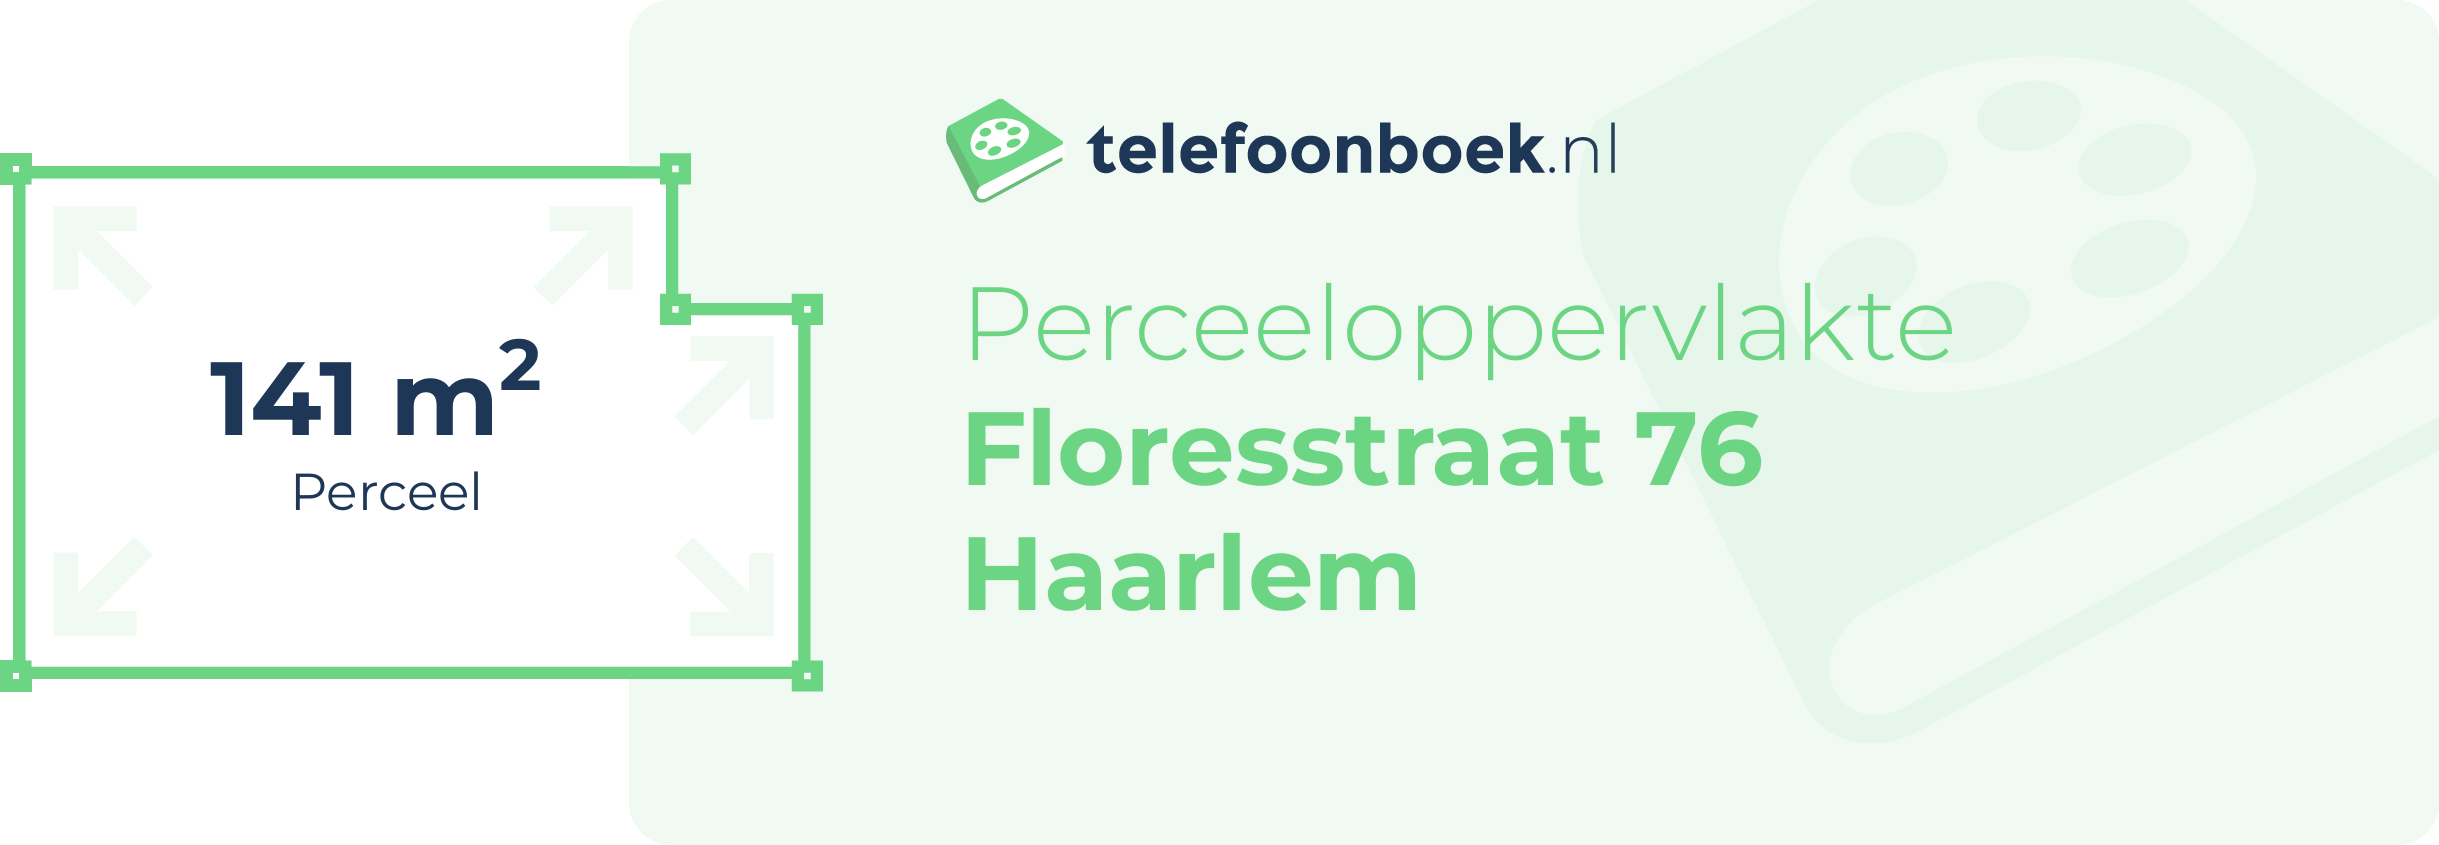 Perceeloppervlakte Floresstraat 76 Haarlem